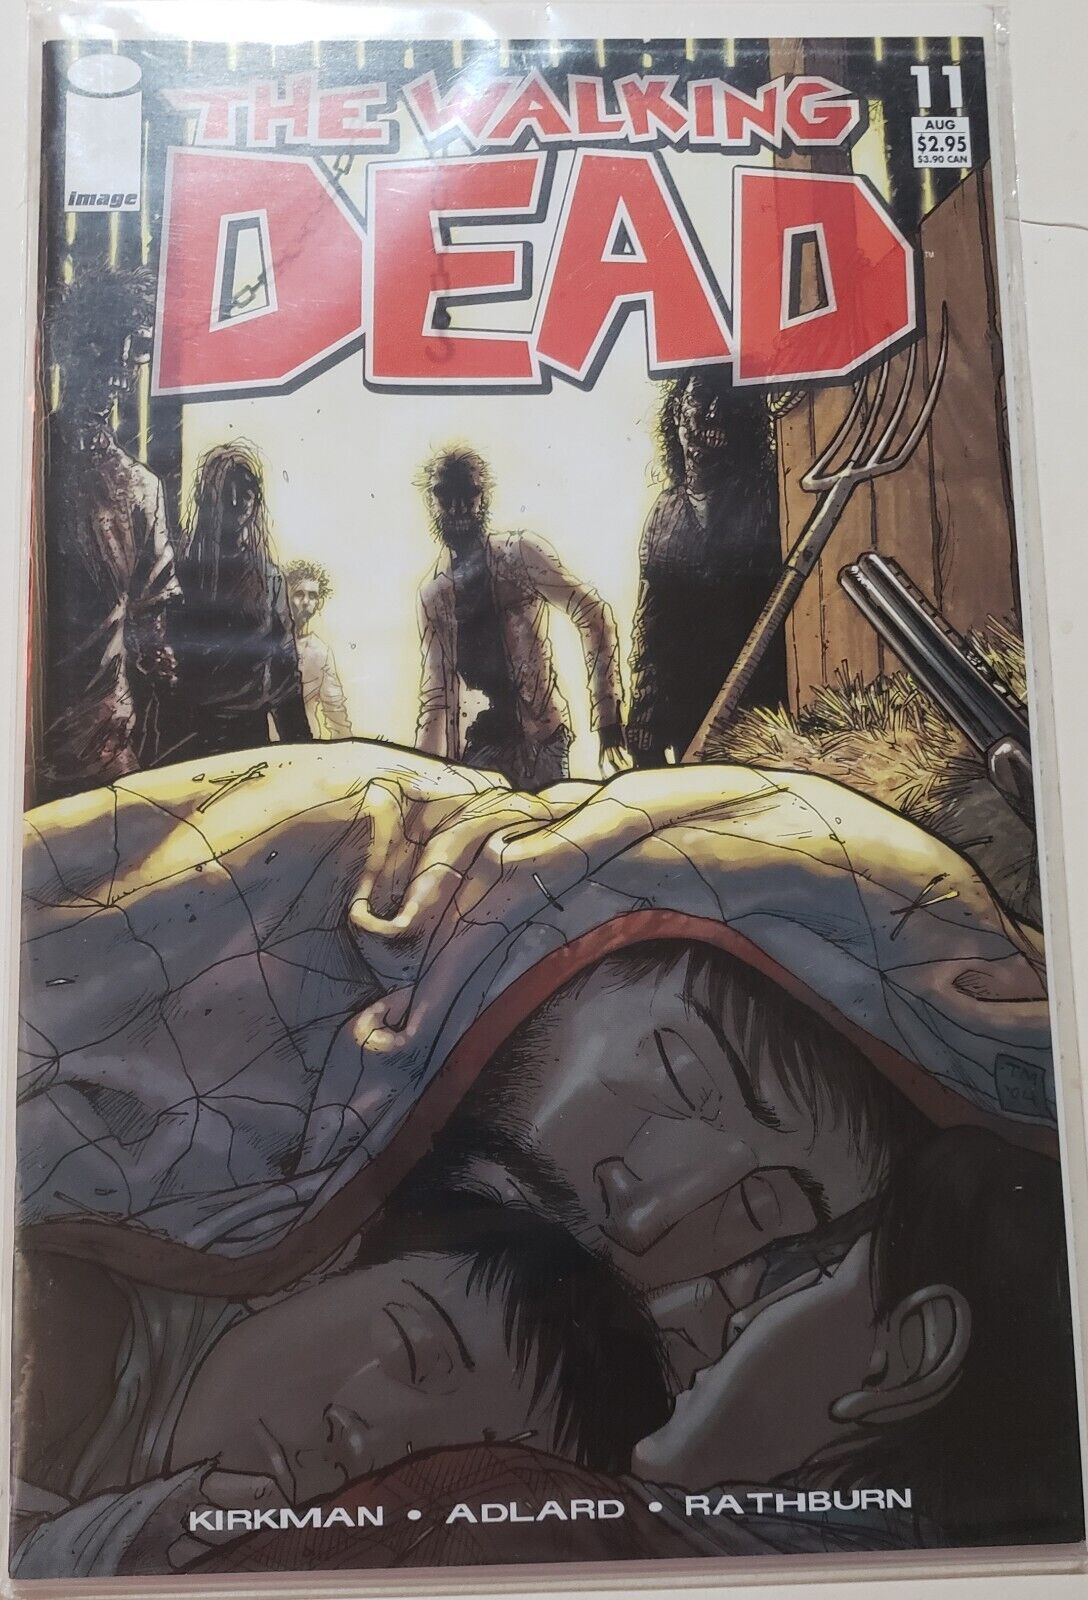 The Walking Dead #11 (Image Comics, August 2004) \